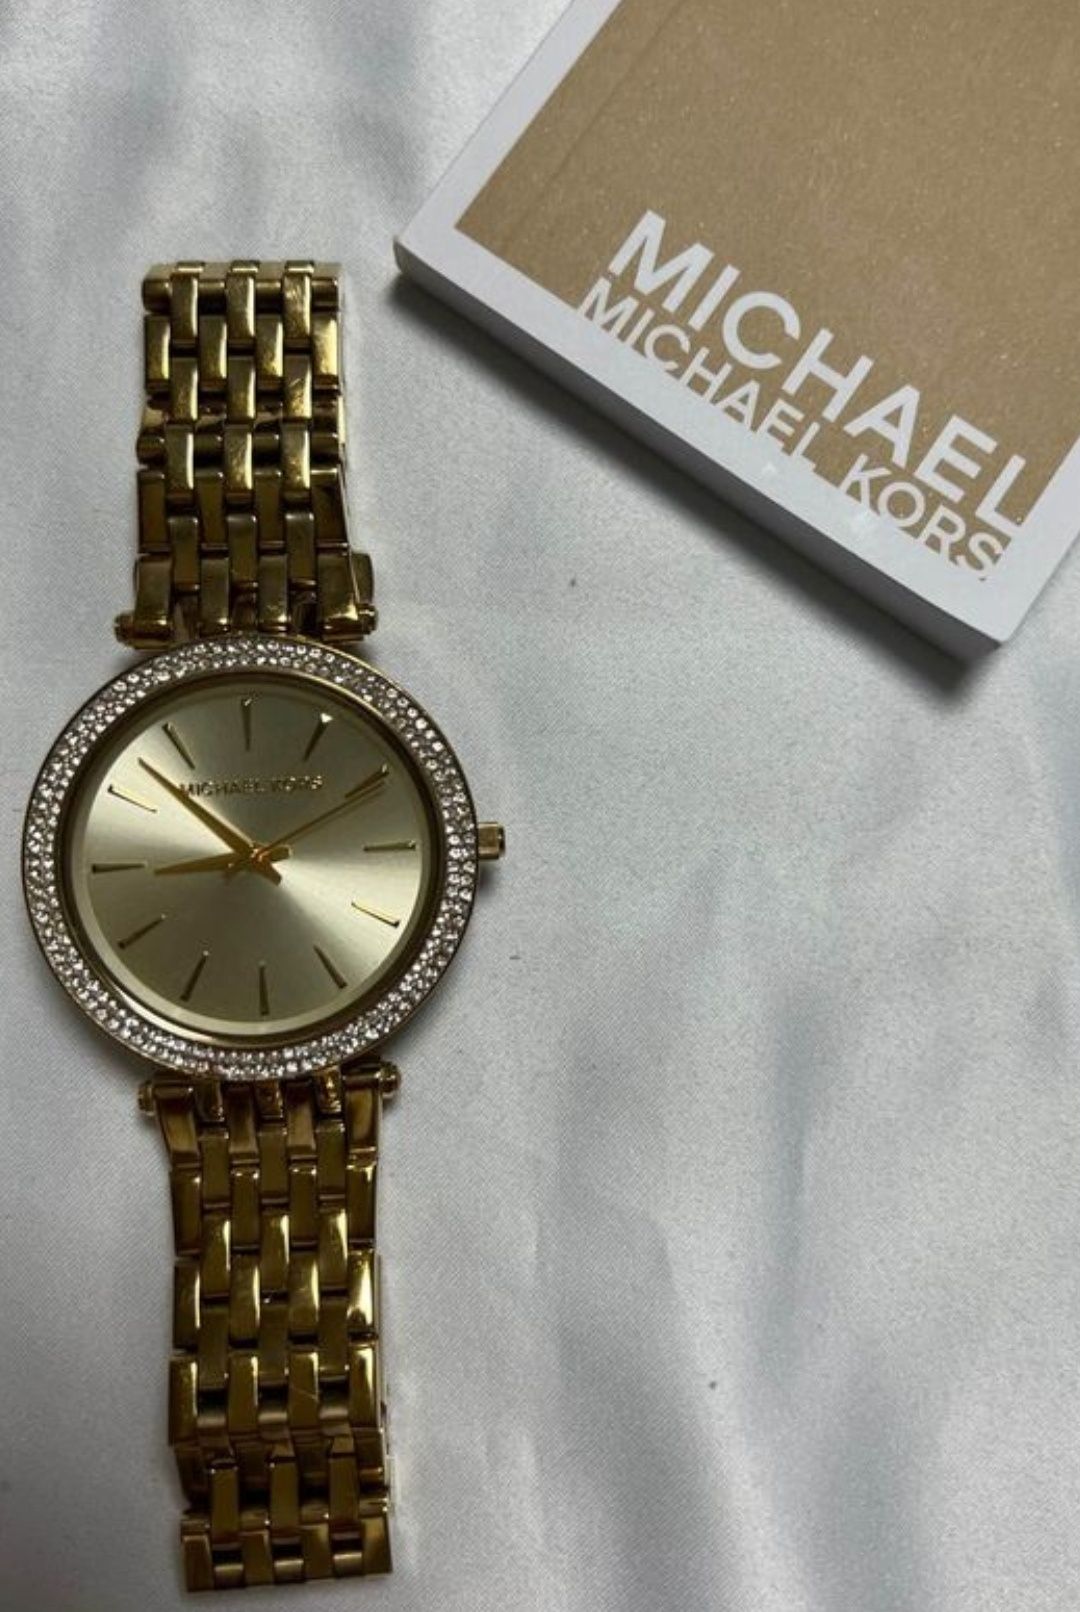 Дамски часовник Michael Kors - истинско бижу от Швейцария